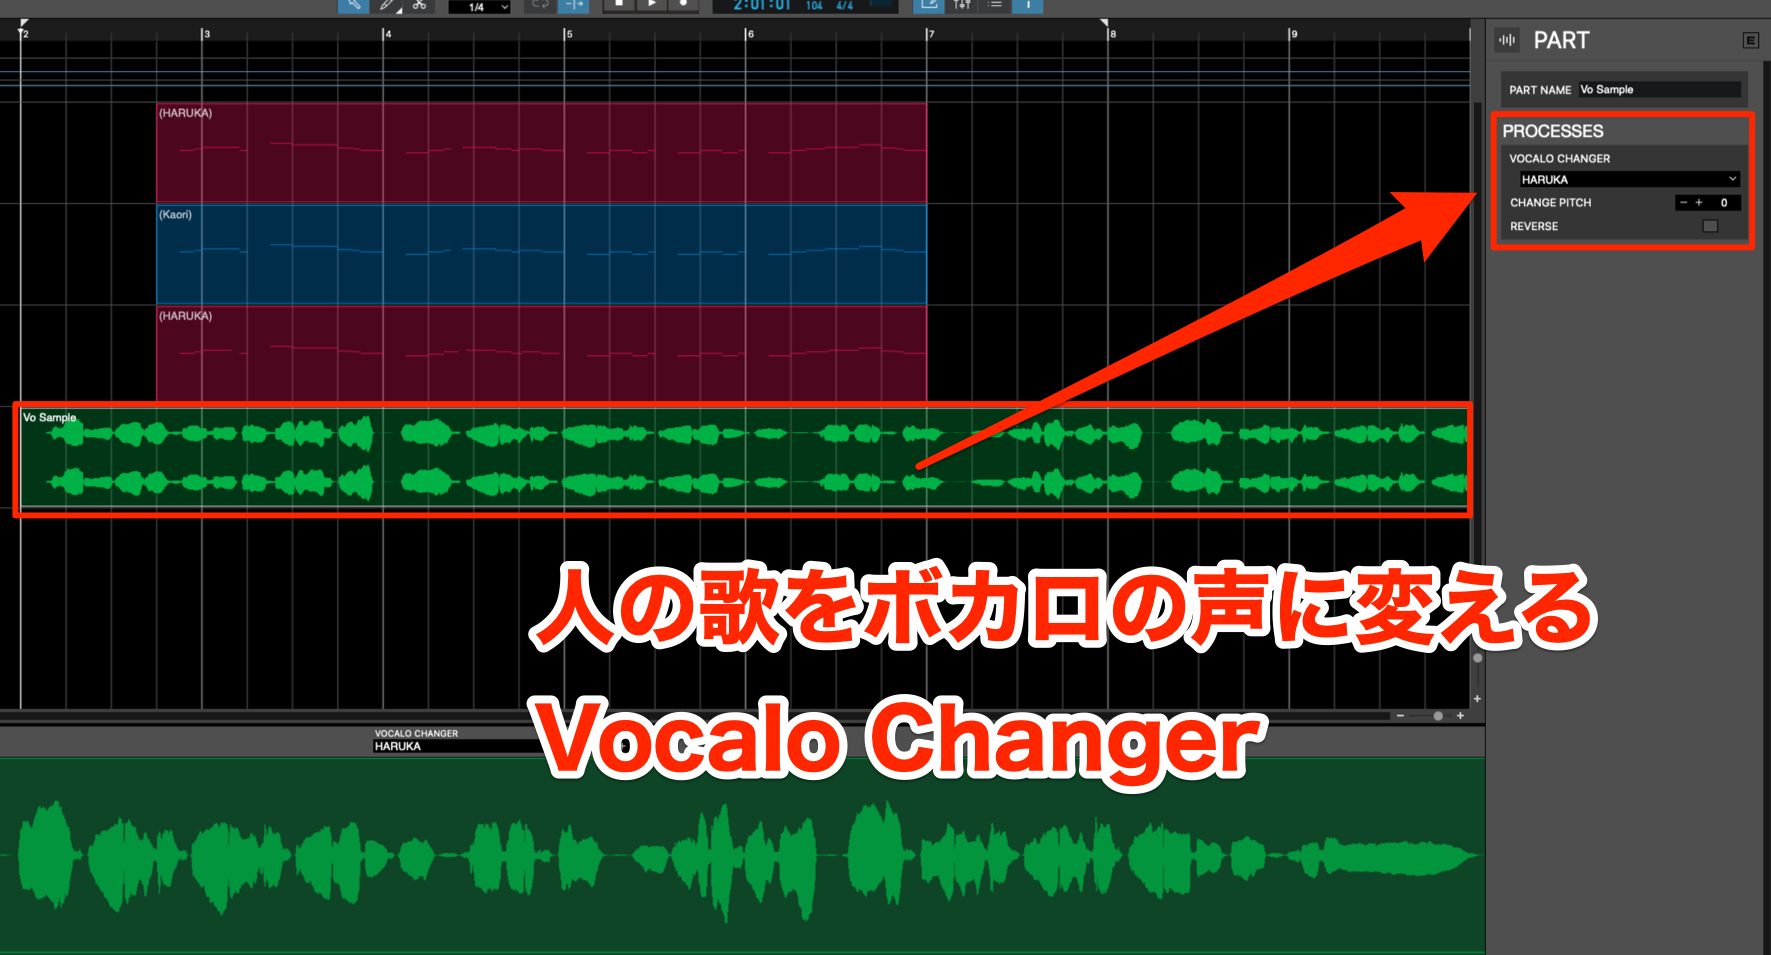 Vocalo Changer